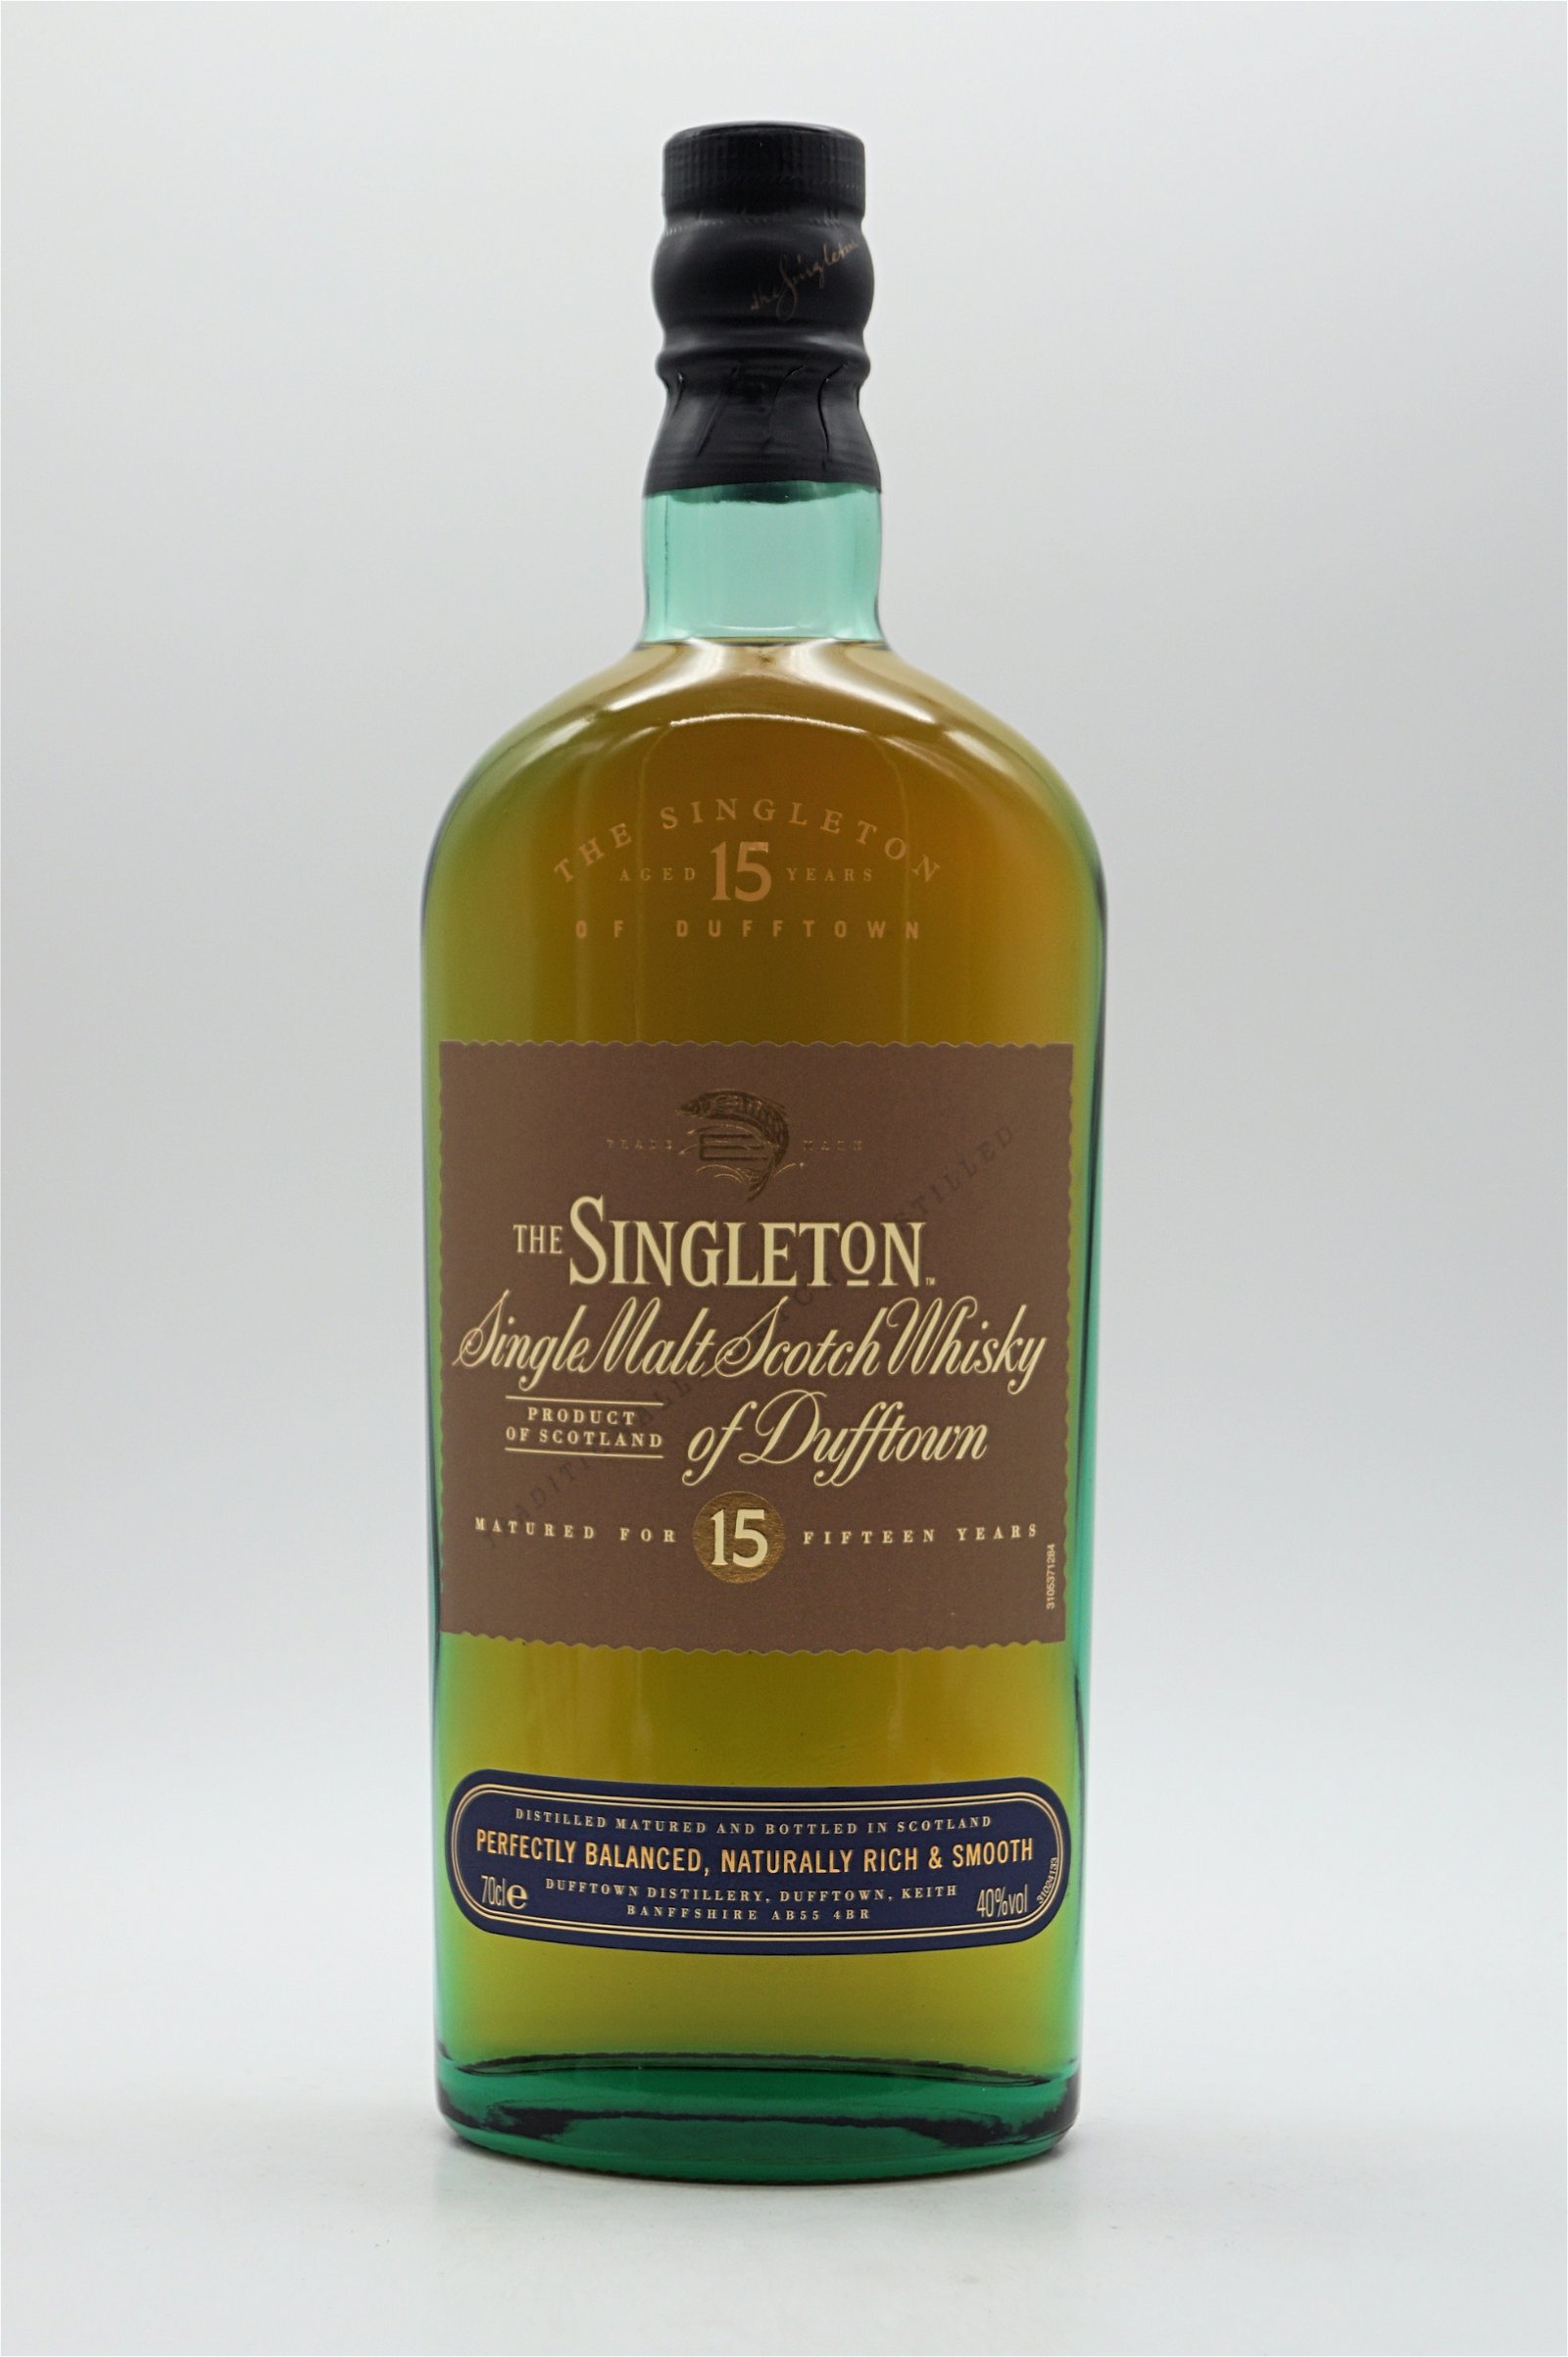 The Singleton of Dufftown 15 Jahre Single Malt Scotch Whisky